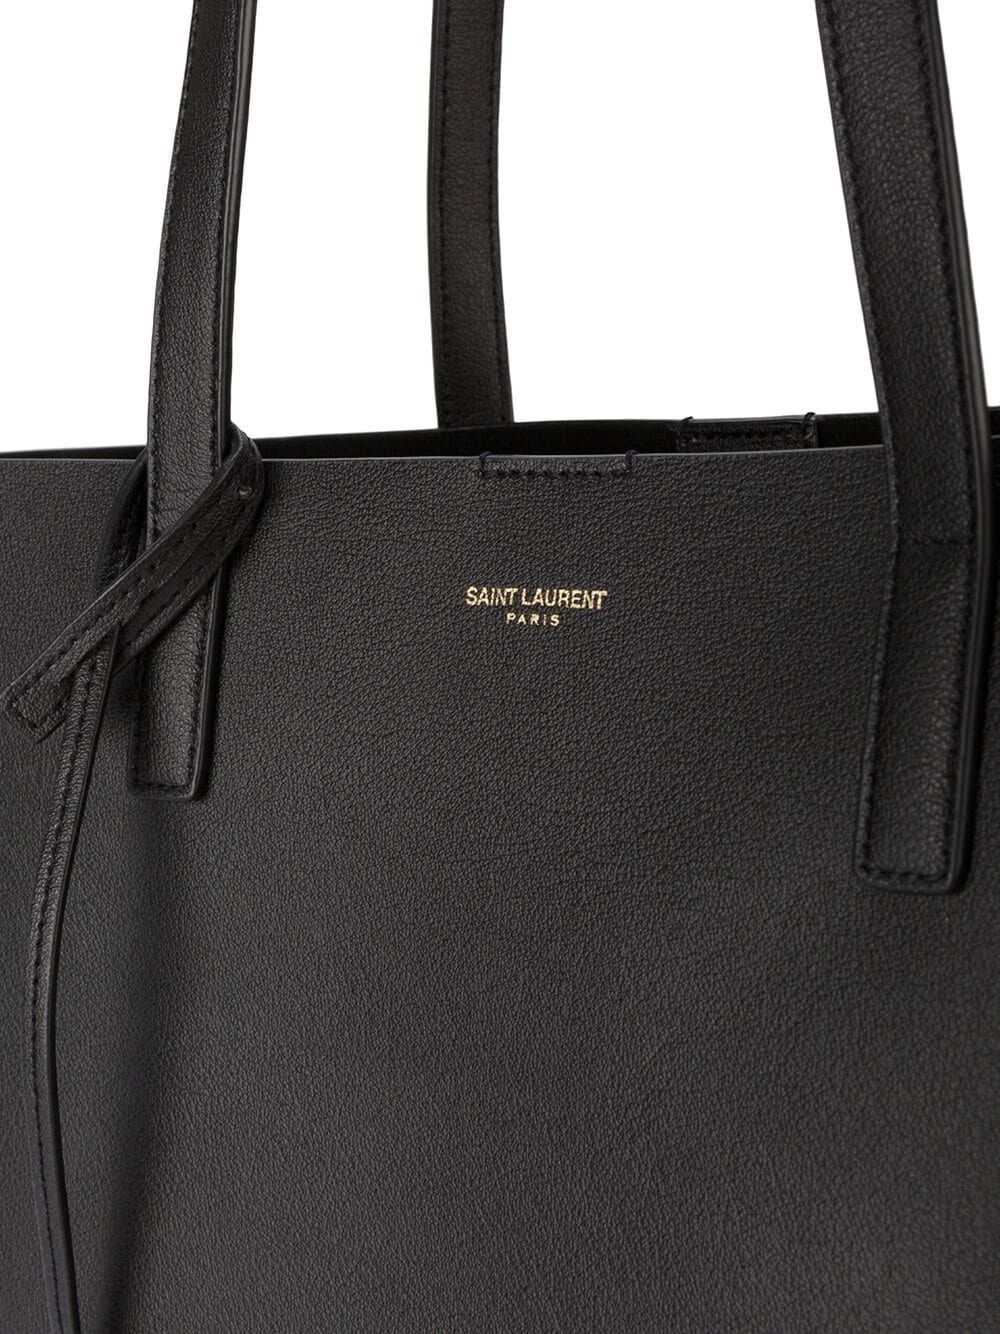 Saint laurent leather shopping bag - 6